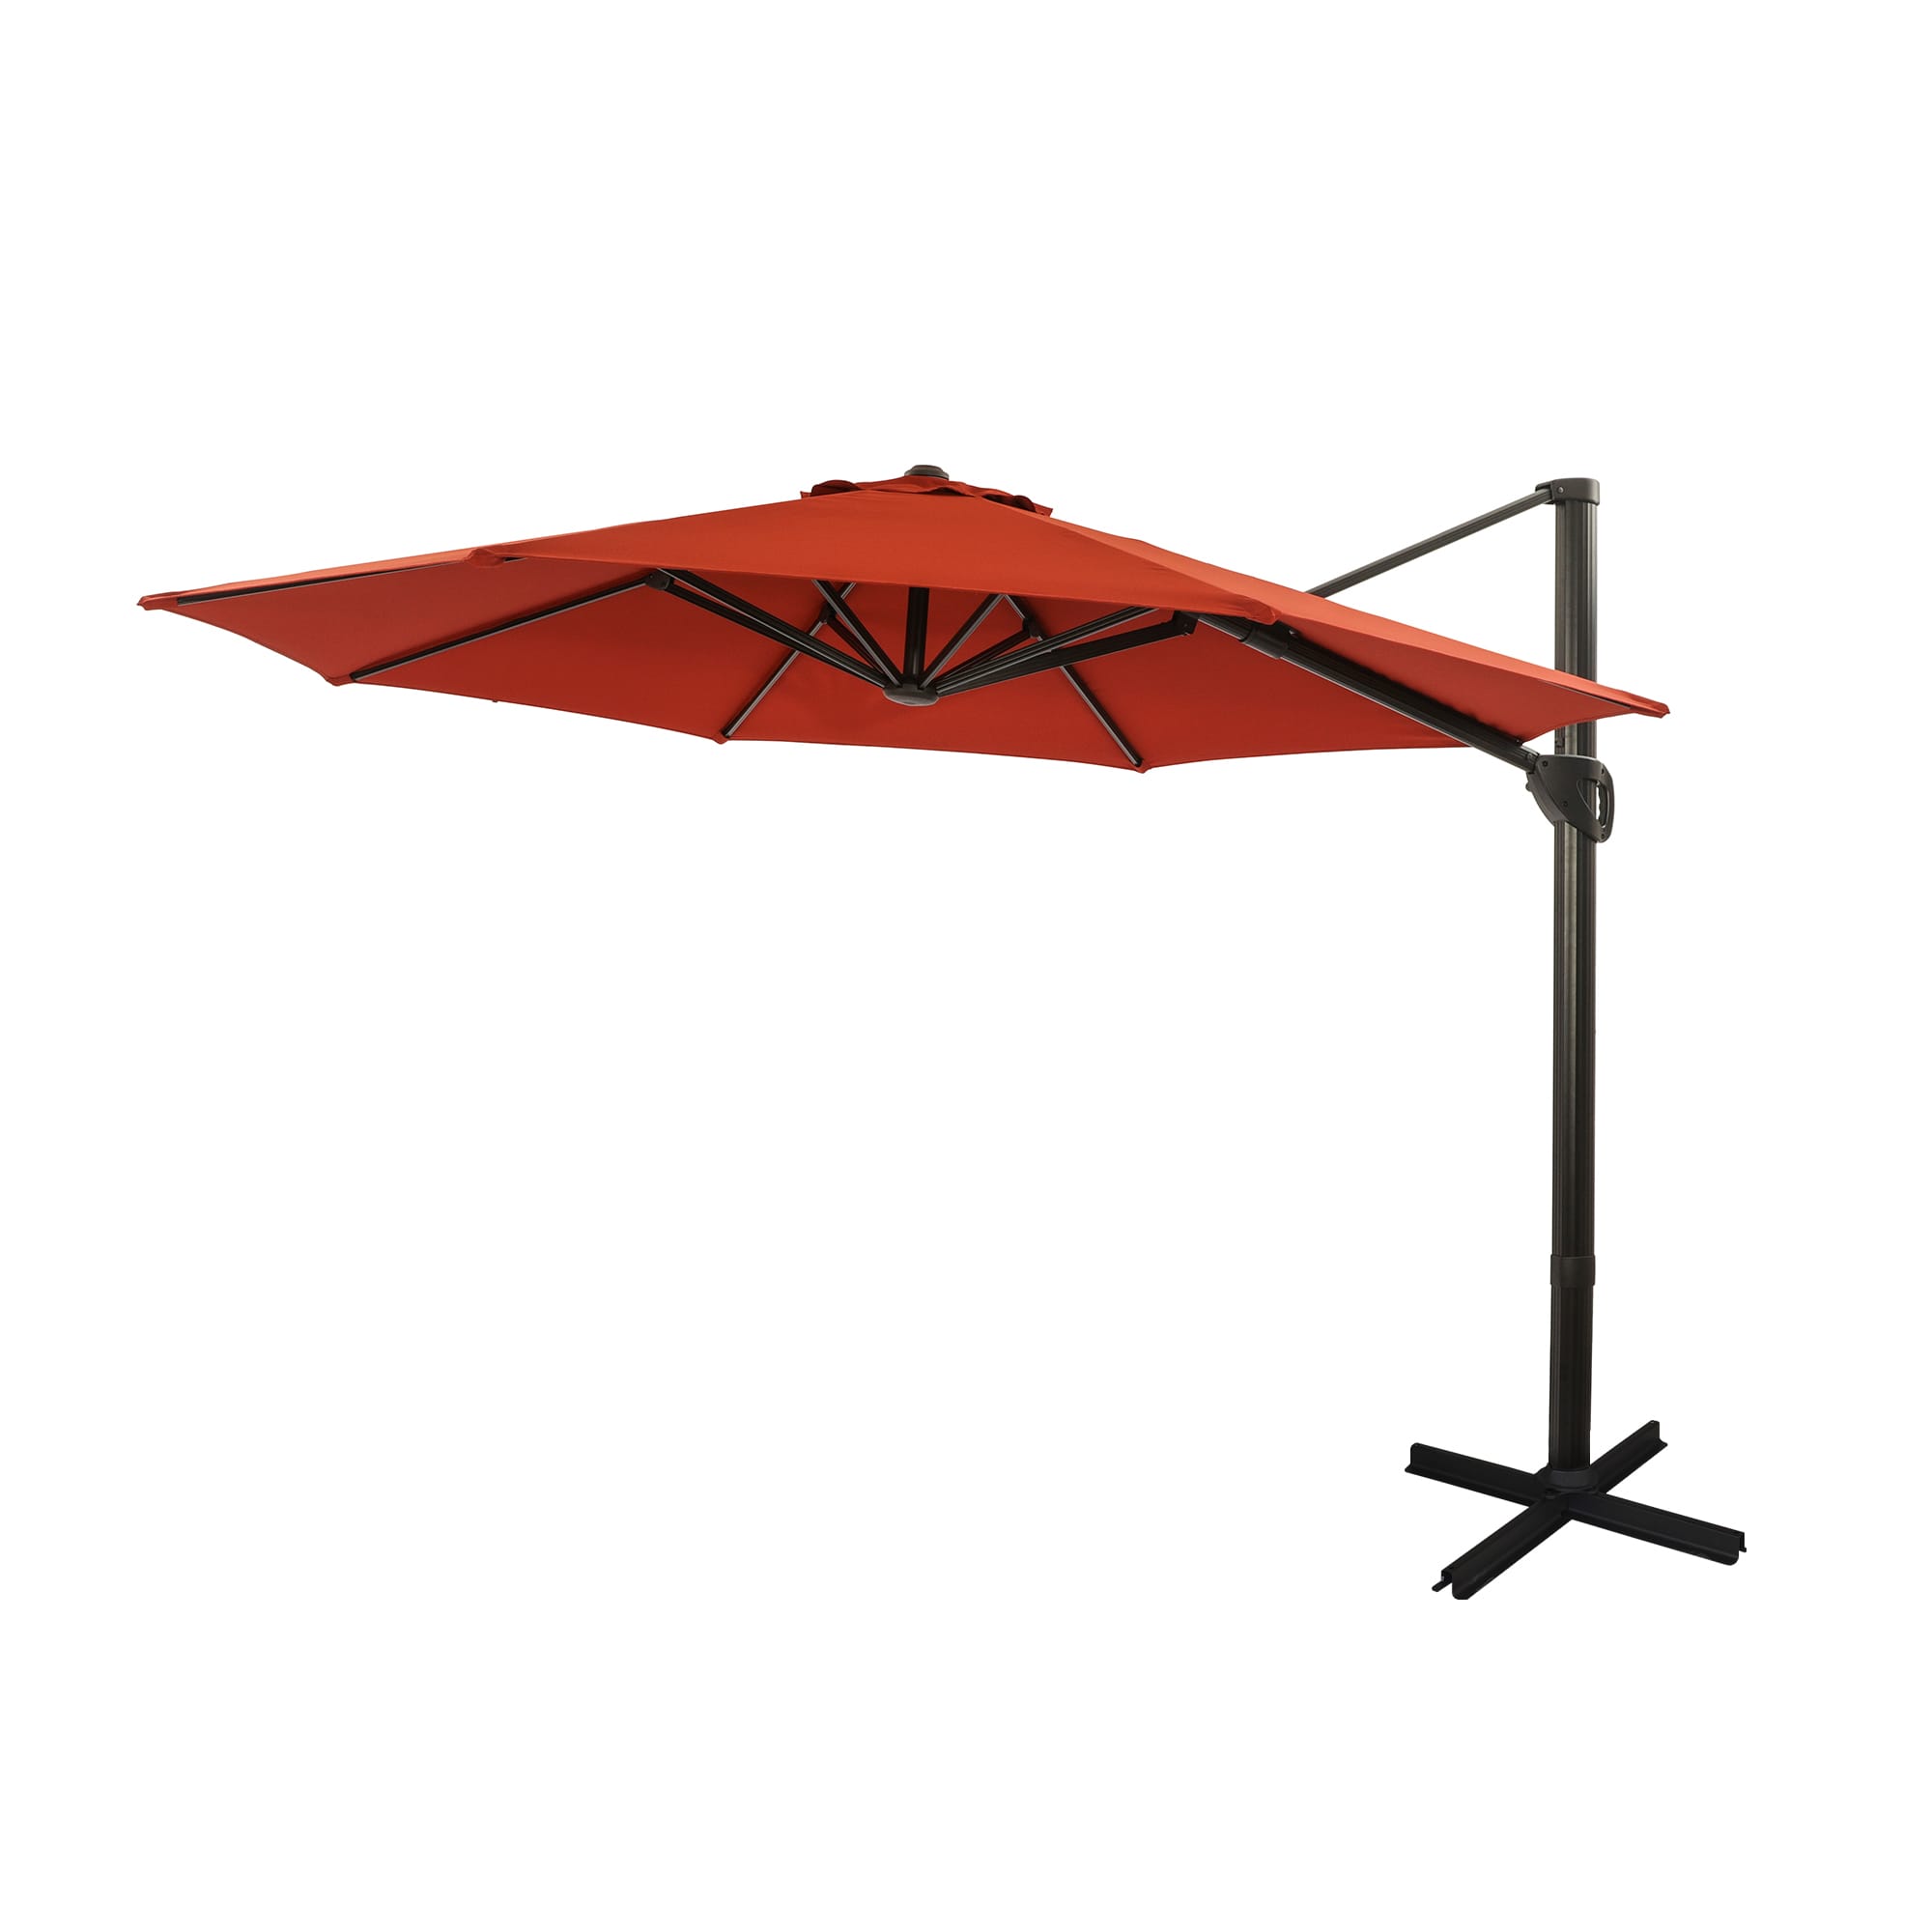 CASAINC 11Ft Patio Round Umbrella Outdoor Market Hanging Aluminum Umbrella with Crank (Without Base)